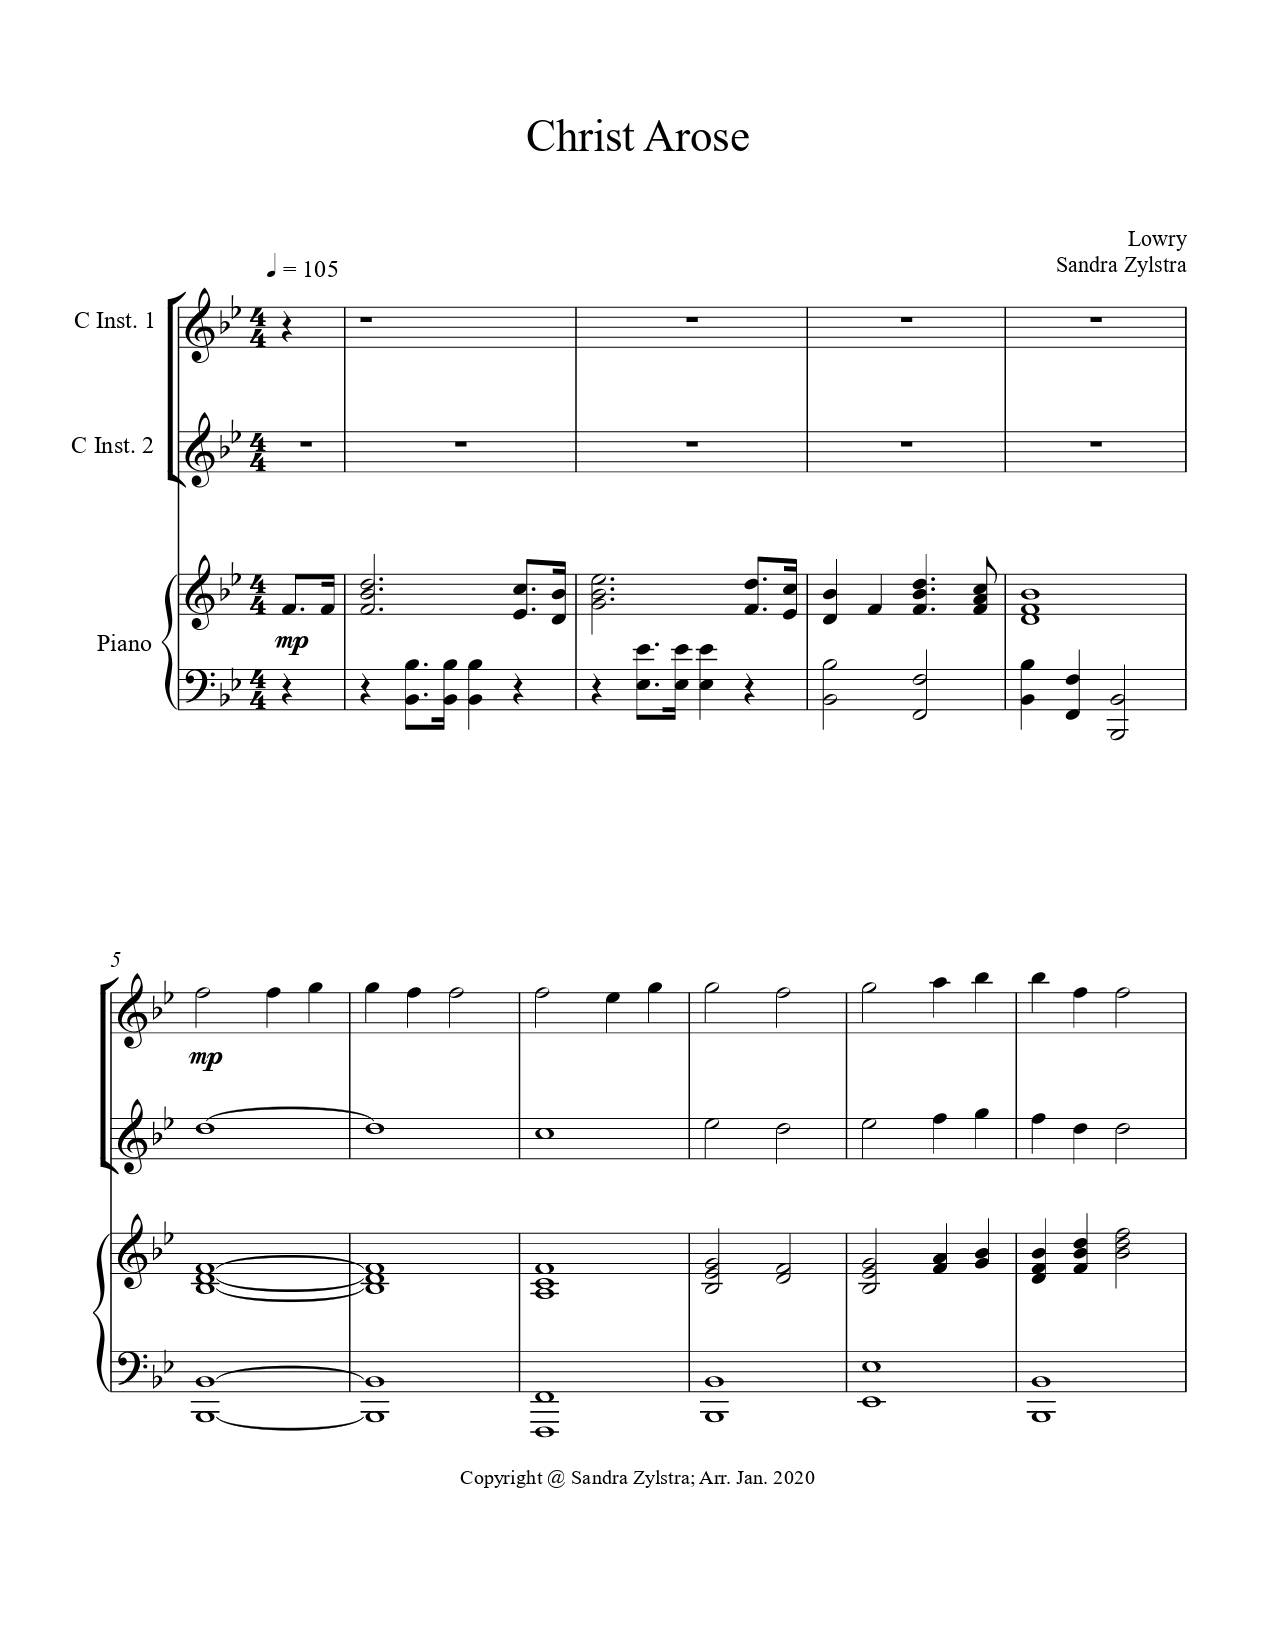 Christ Arose Solo C instrument treble duet piano Full Score page 00011